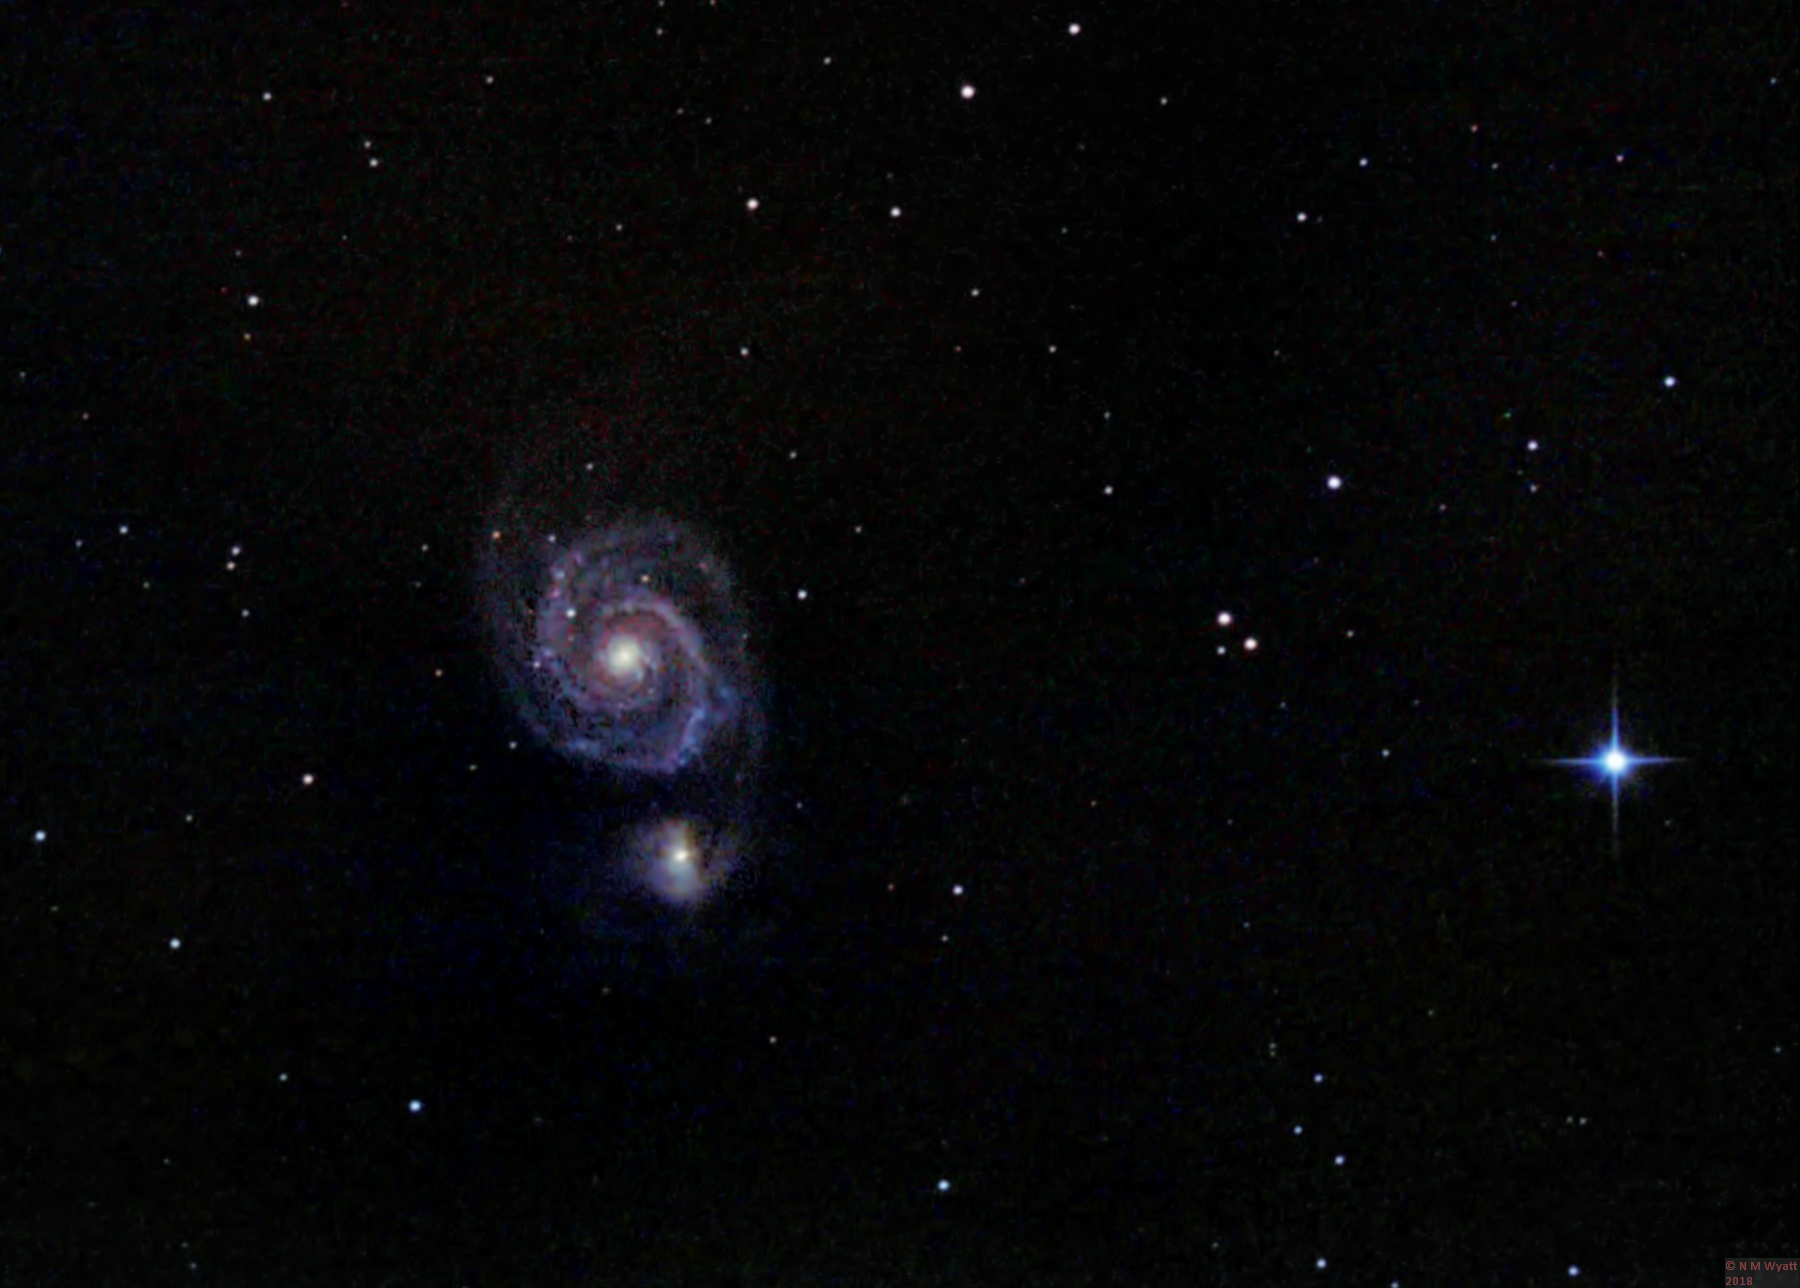 The Whirlpool Galaxy, M51